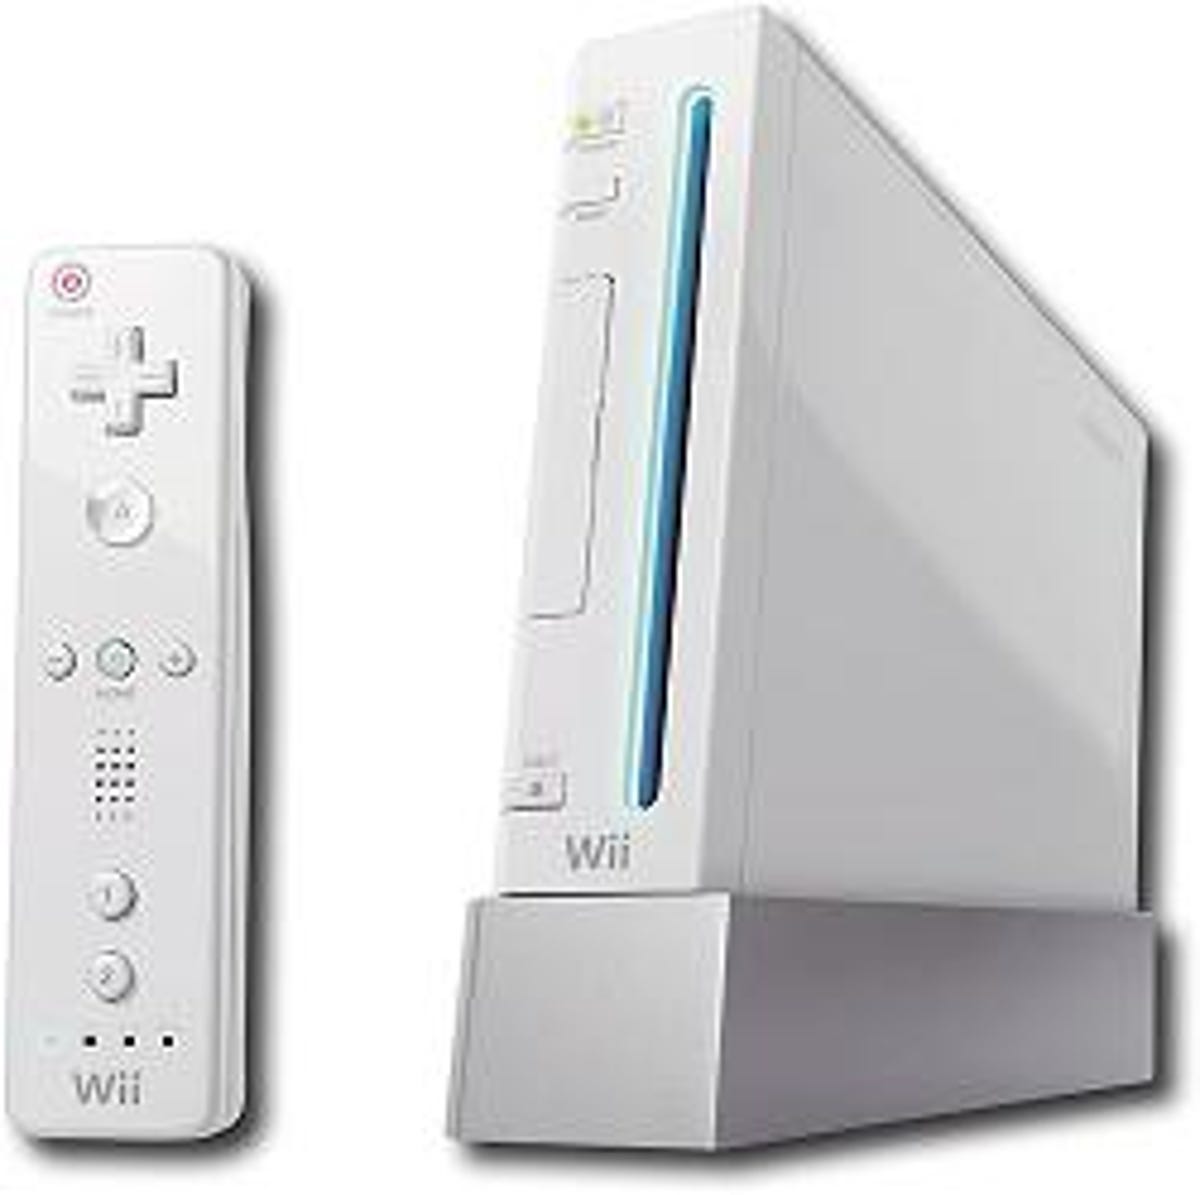 Nintendo Wii uses MEMS technology for motion detection